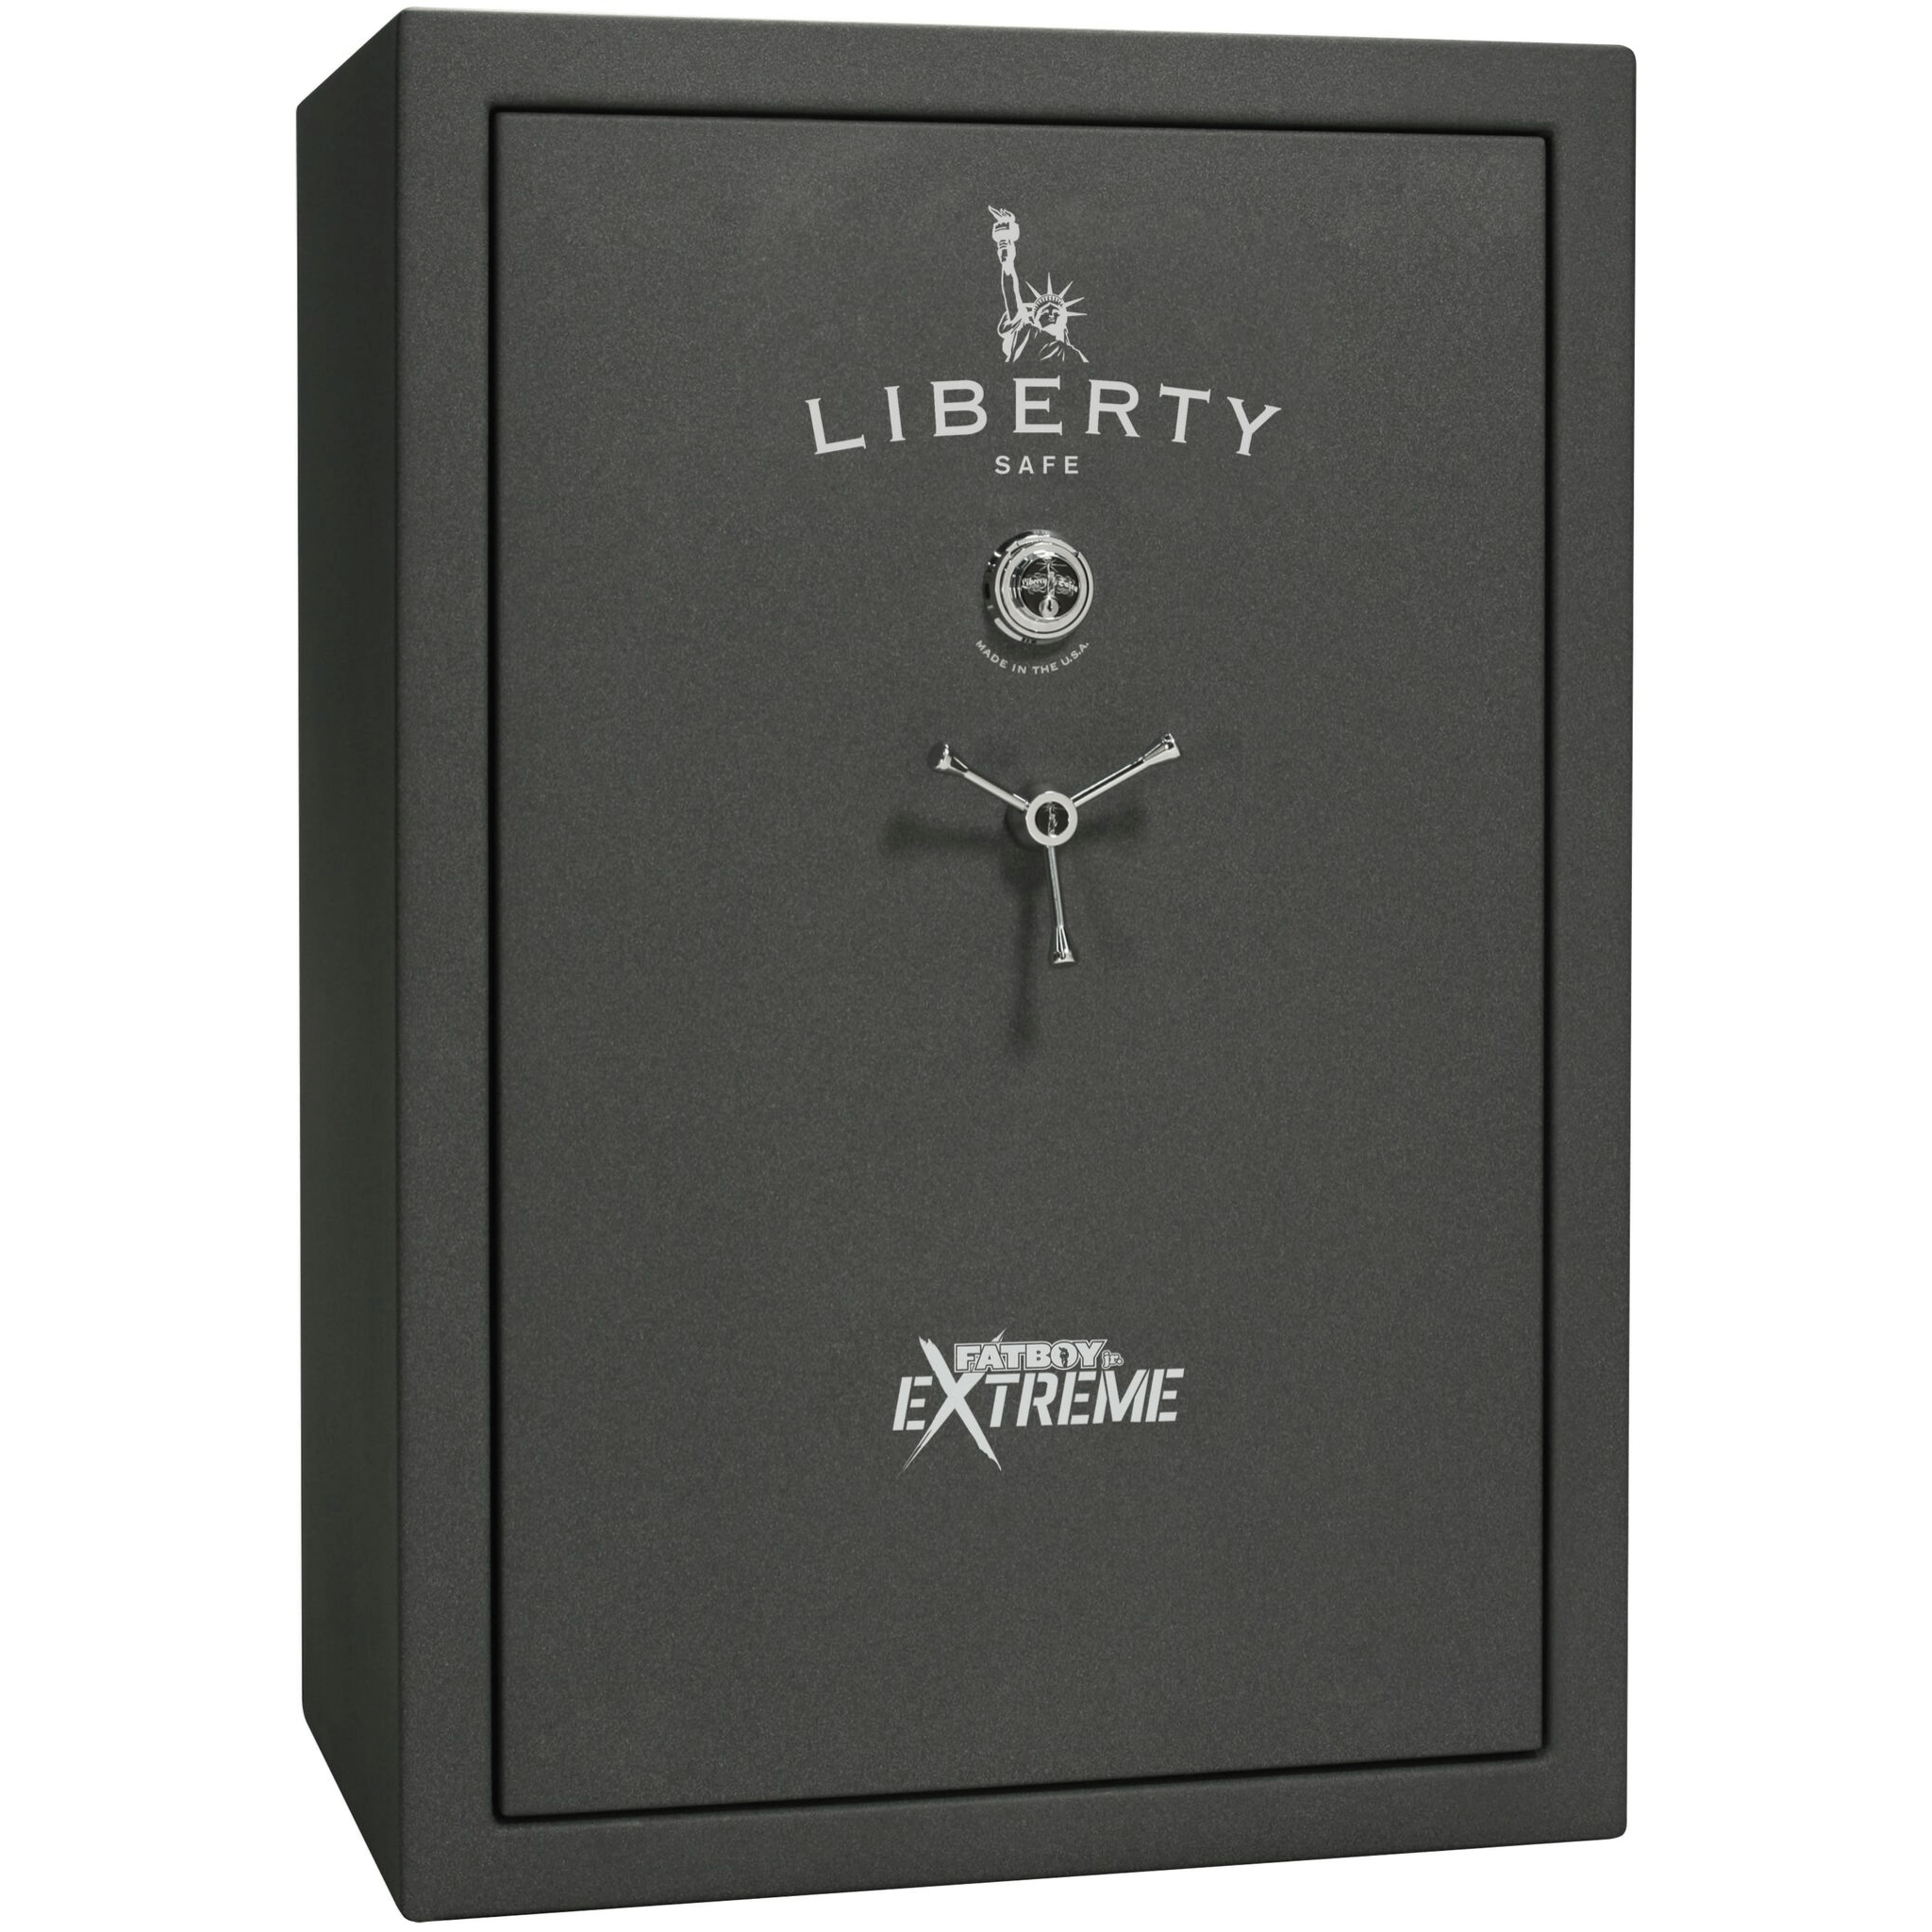 Liberty Fatboy Jr 48 Extreme Gun Safe with Mechanical Lock, photo 1